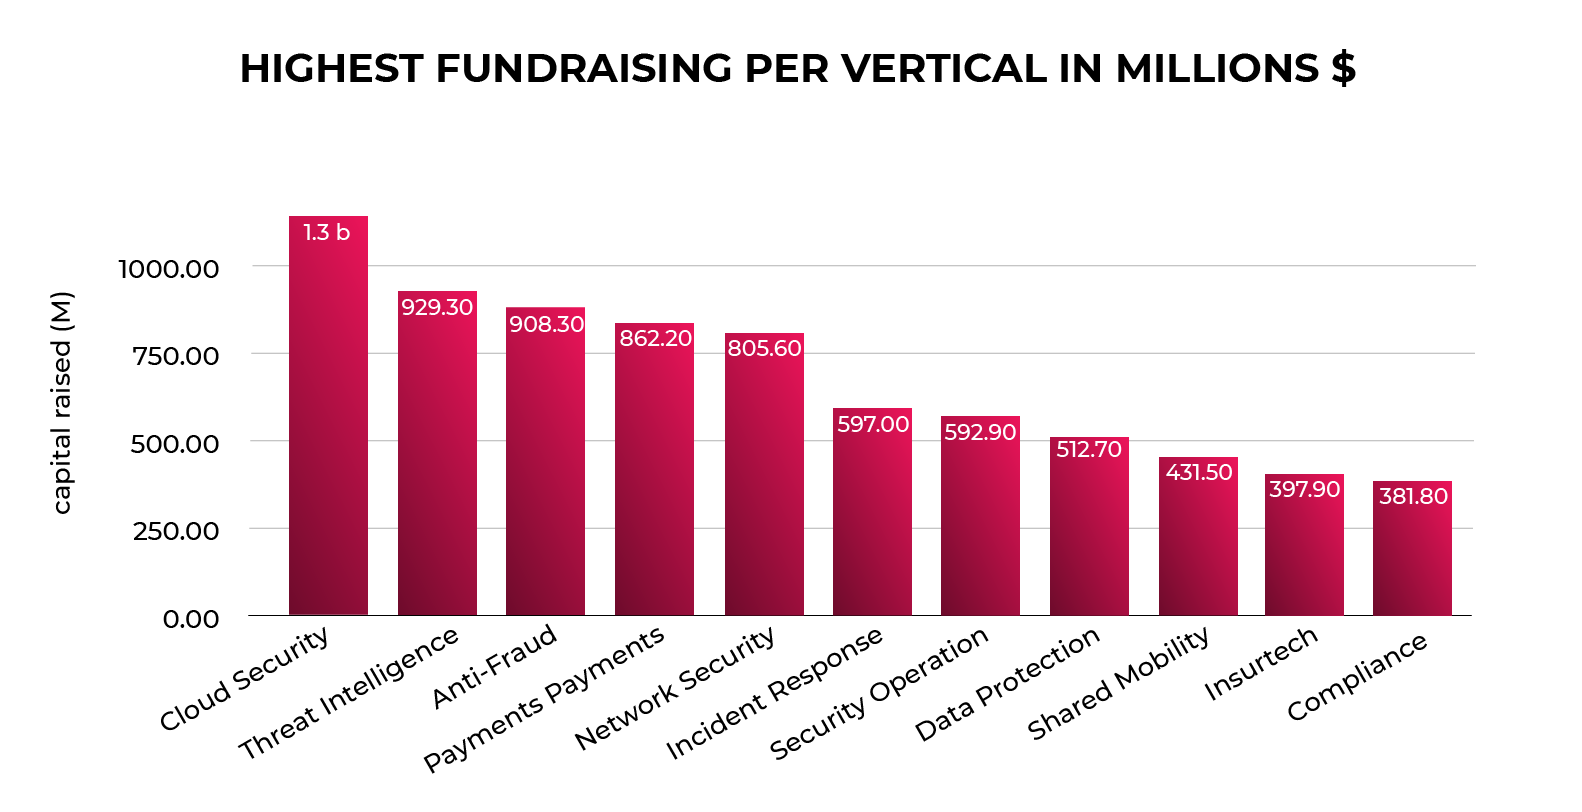 Highest Fundraising Per Vertical in Millions $